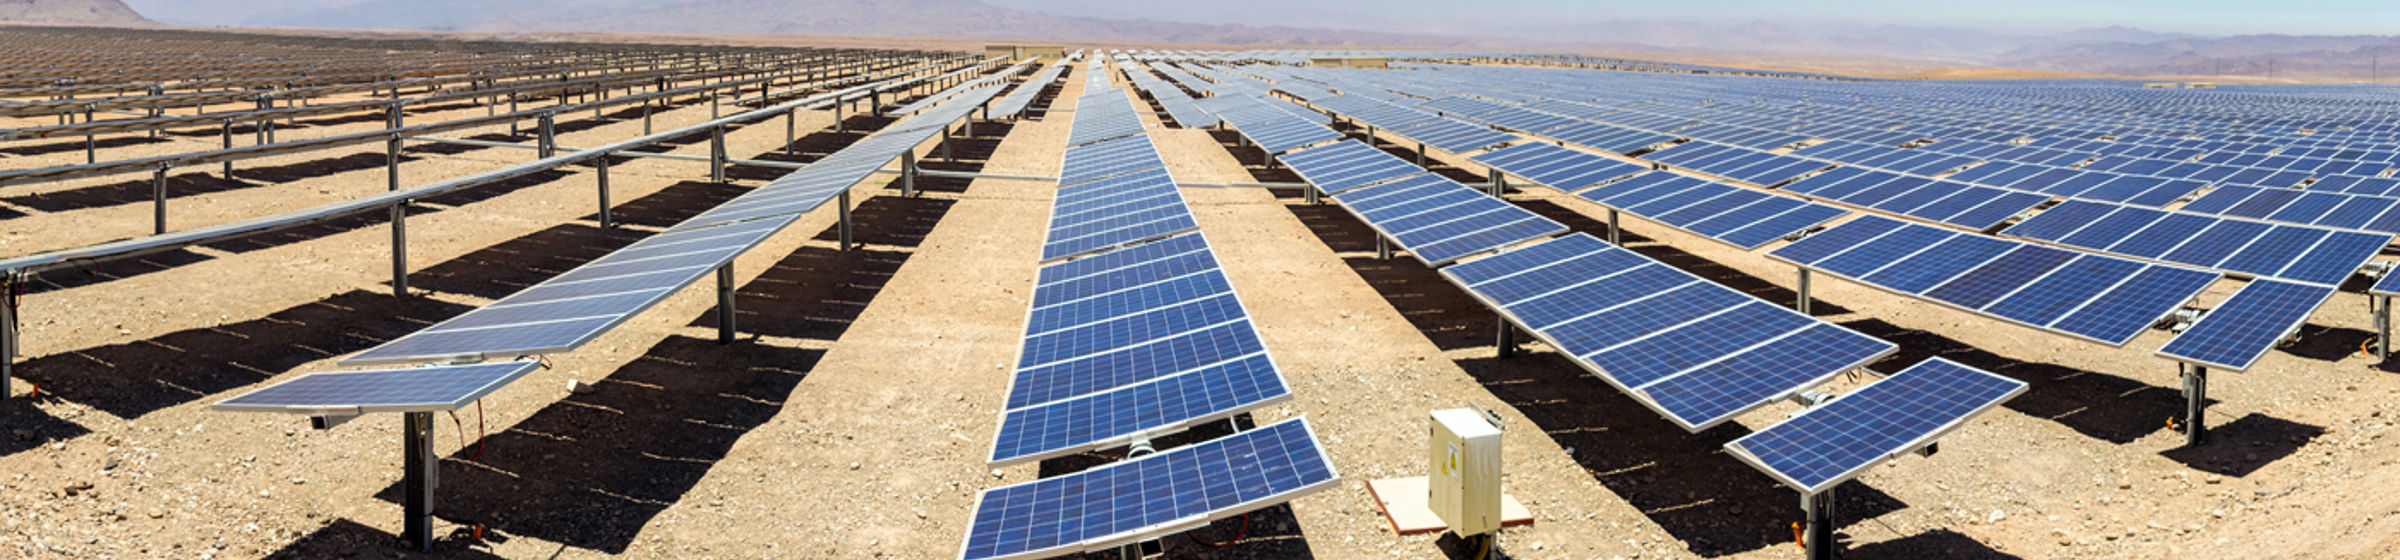 Solar panels in Atacama desert